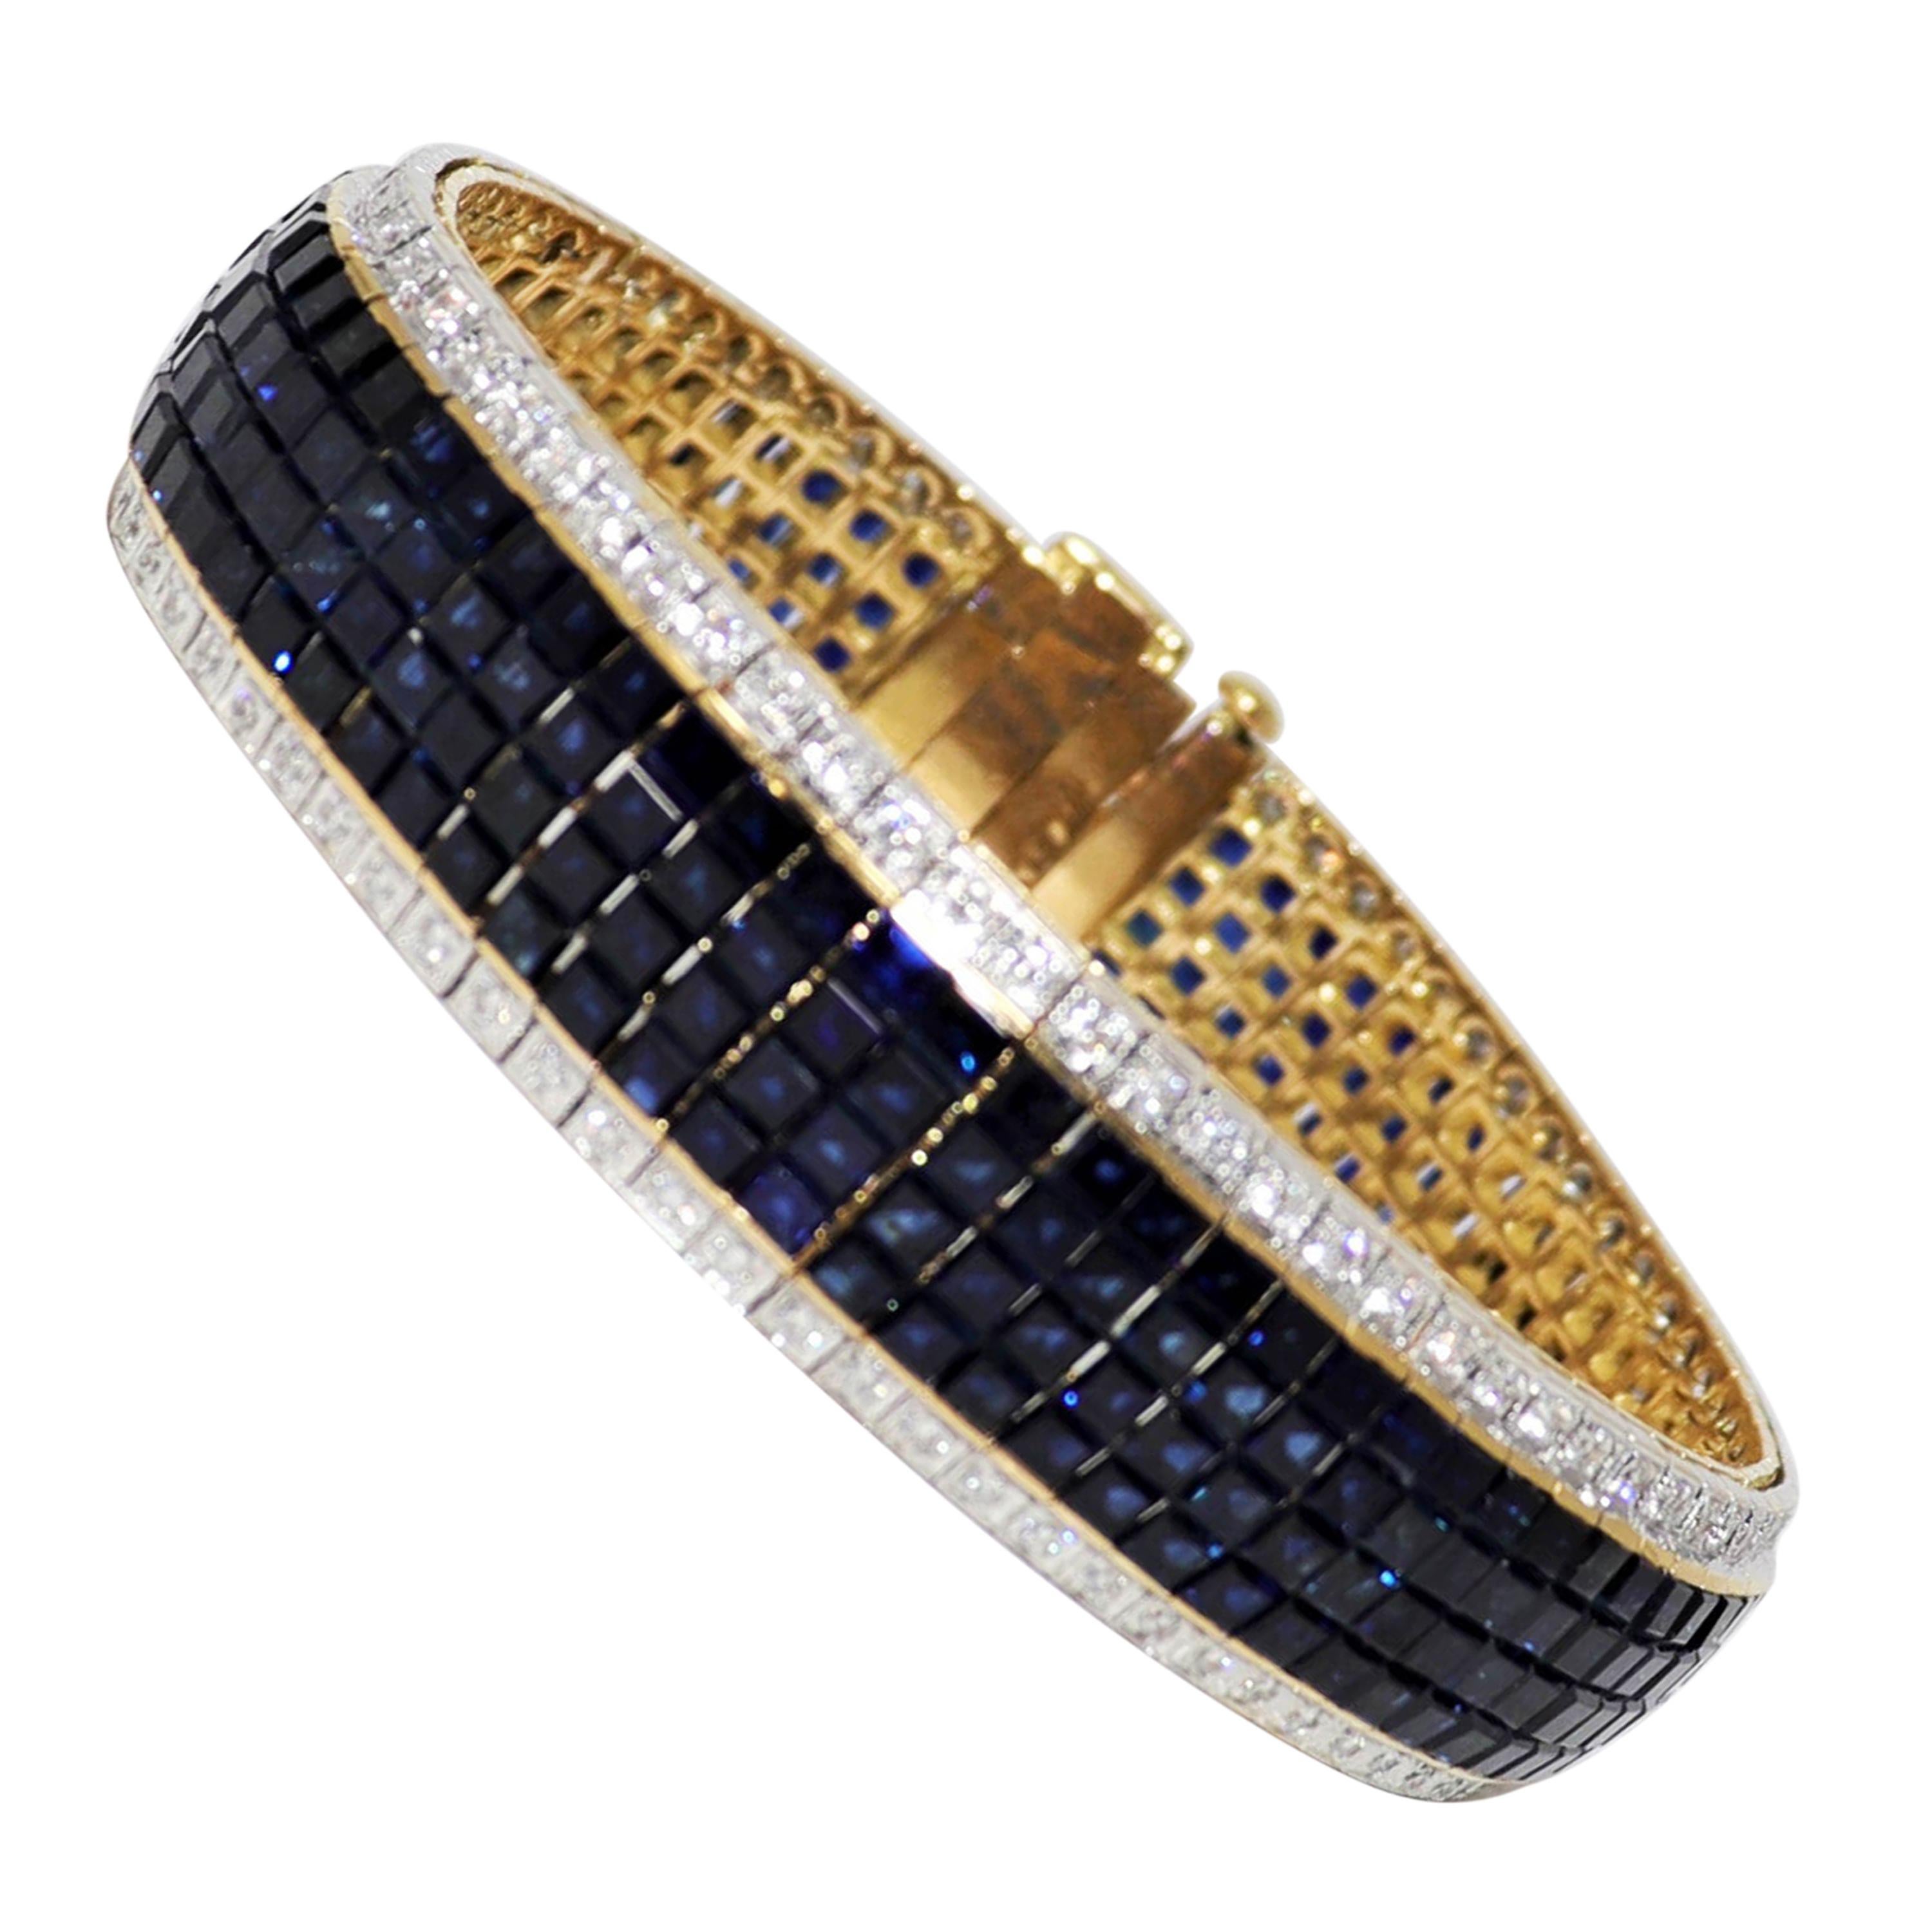 34.94 Carats Total Multi Row Sapphire and Diamond Bracelet 18 Karat Gold Cuff